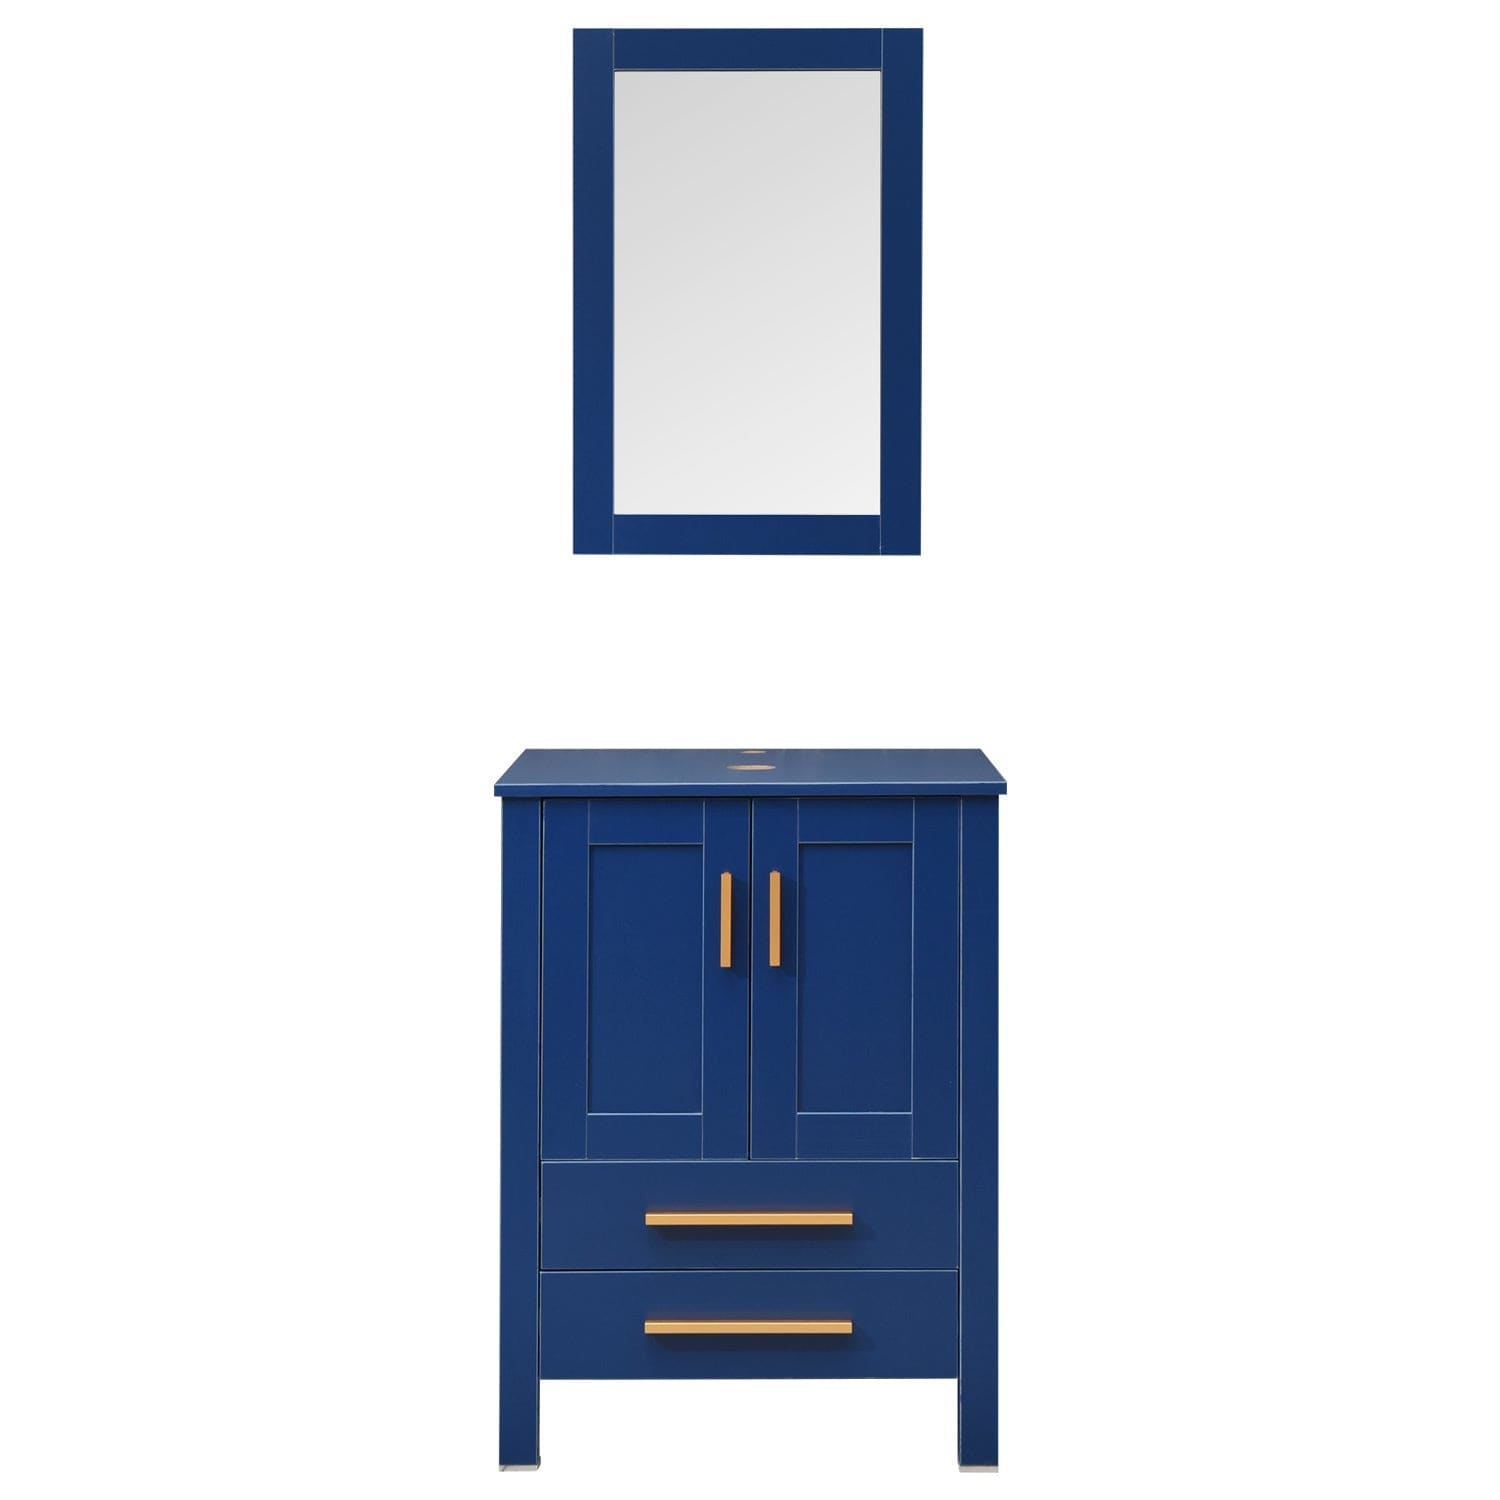 Elecwish 24-Inch Bathroom Wood Vanity Vessel Sink Set Stand Pedestal Cabinet with Mirror without sink displays